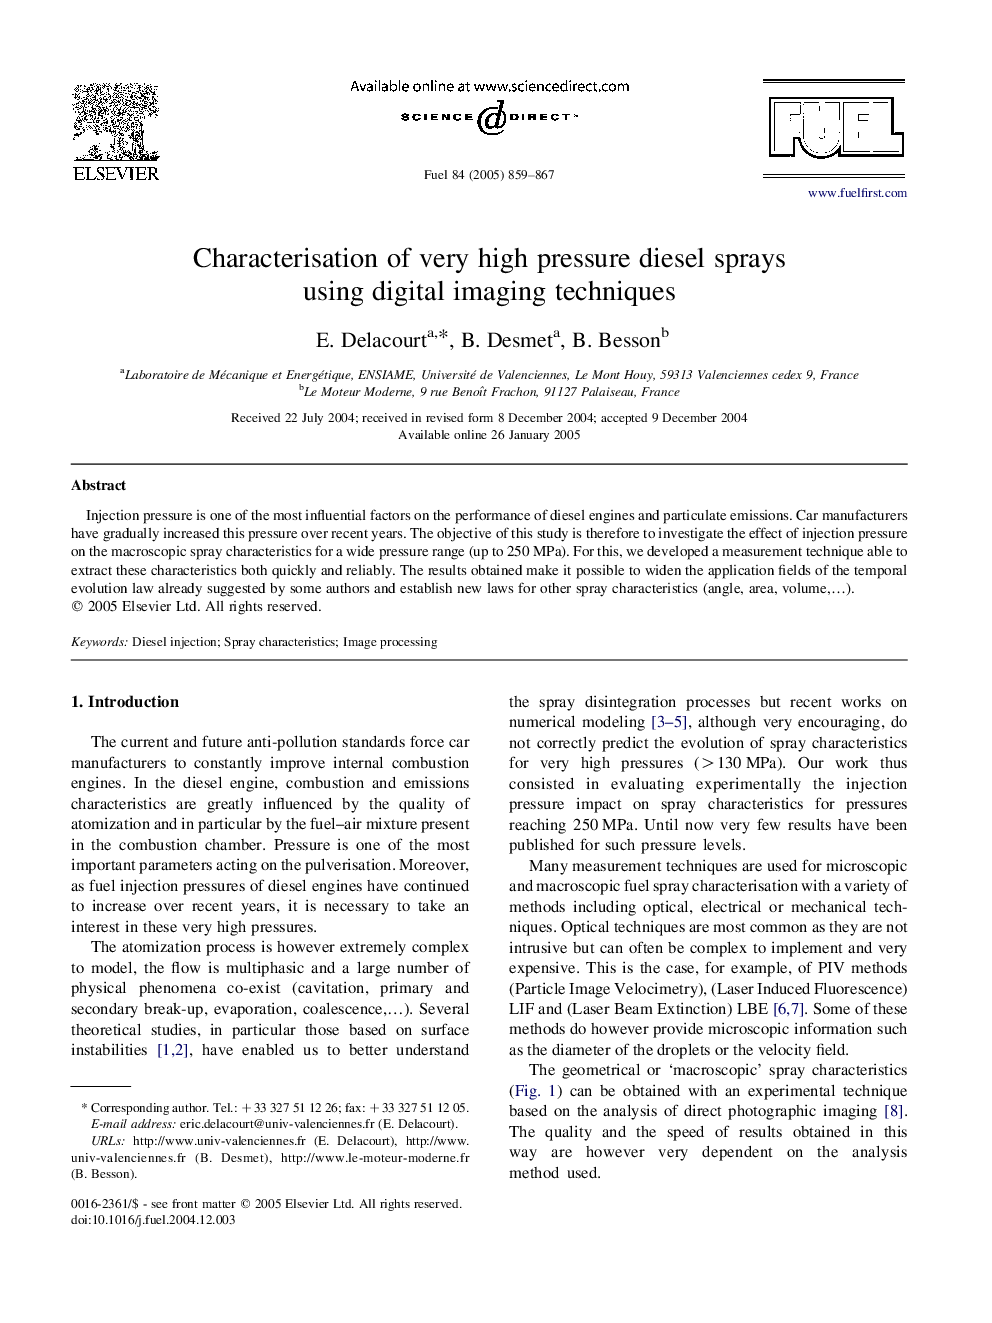 Characterisation of very high pressure diesel sprays using digital imaging techniques